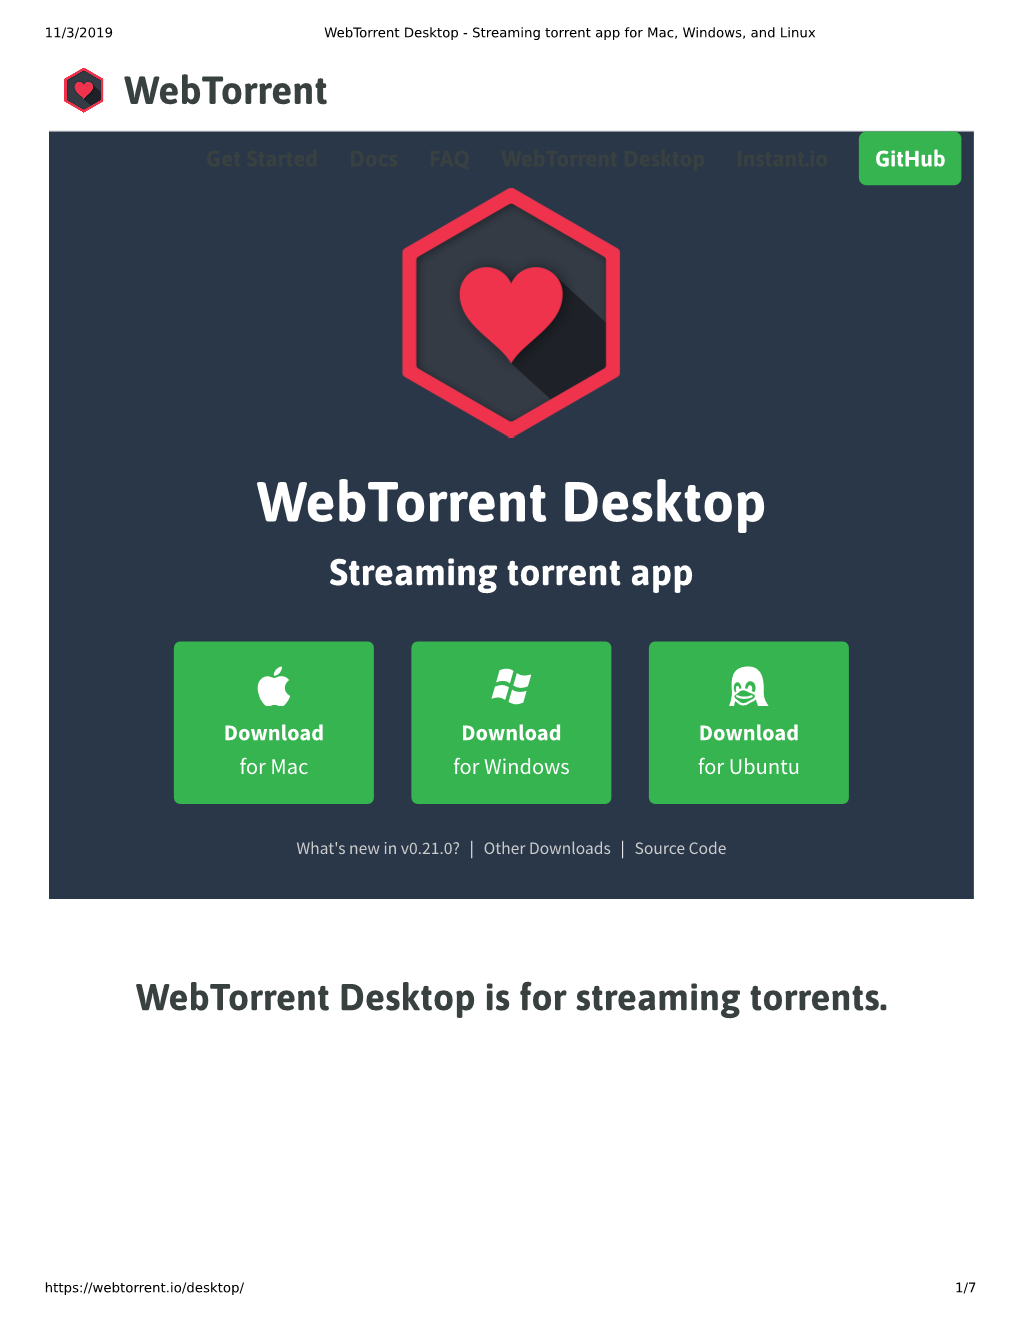 Webtorrent Desktop - Streaming Torrent App for Mac, Windows, and Linux Webtorrent